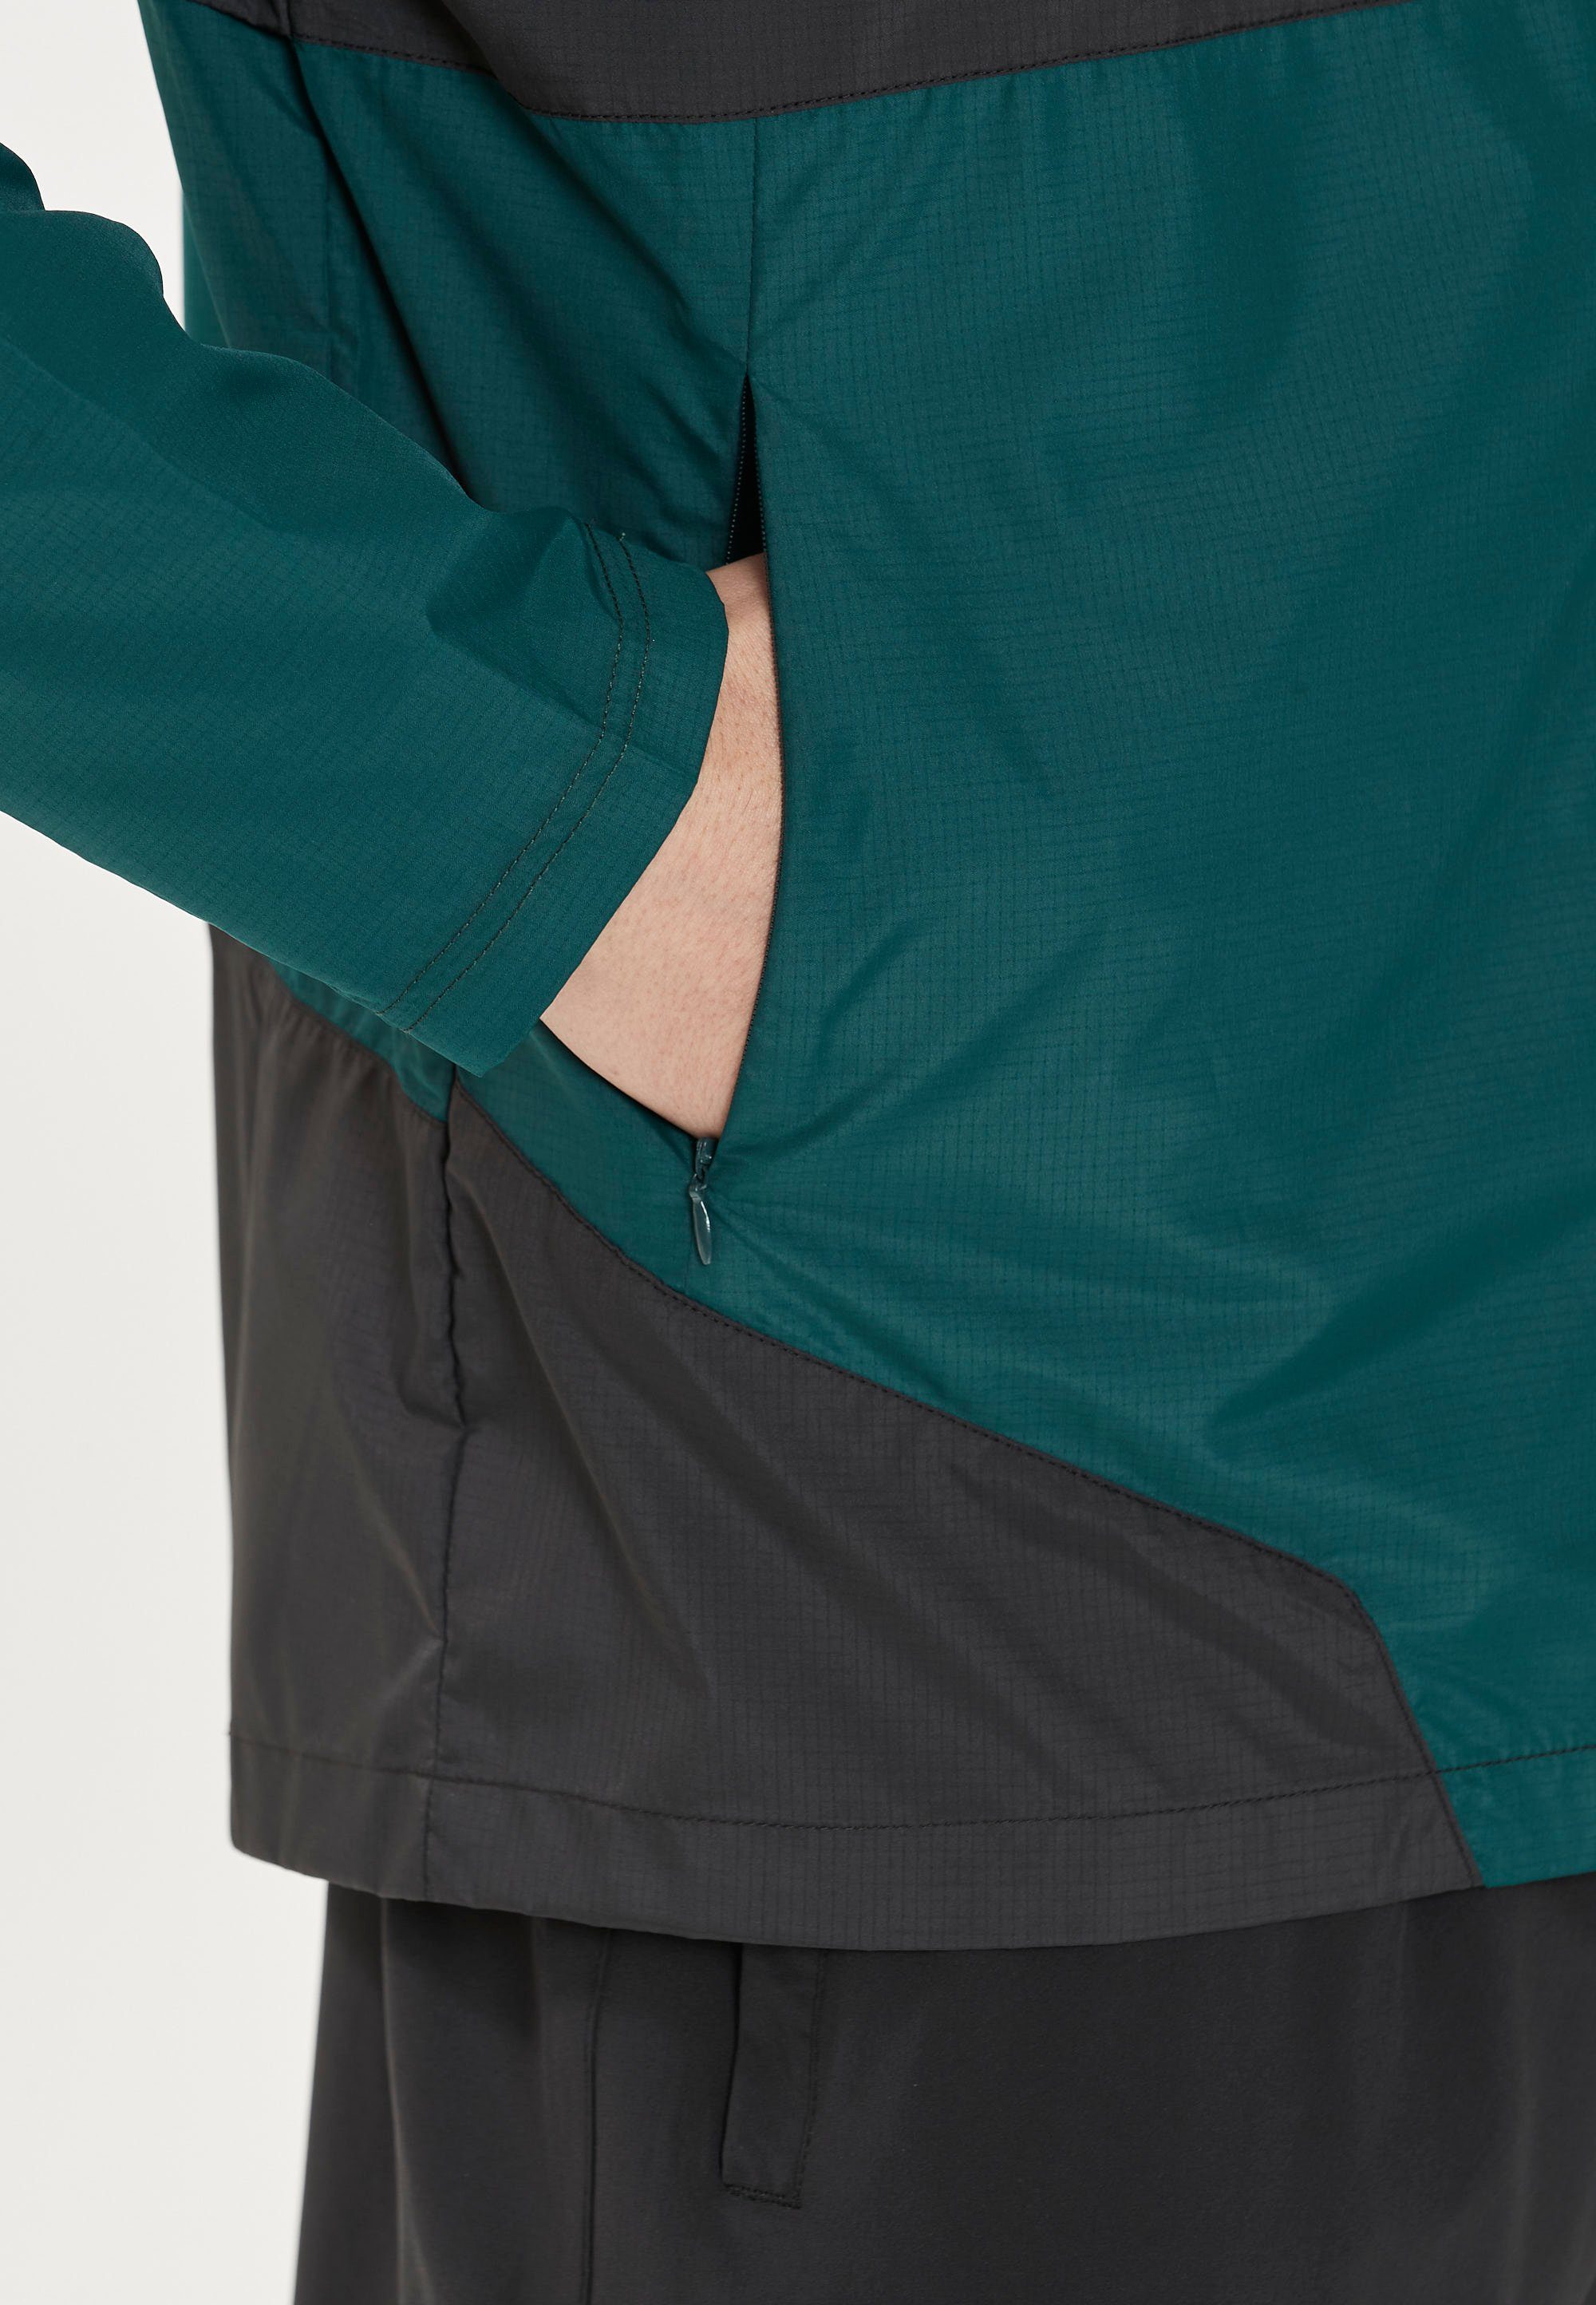 reflektierenden NOVANT Laufjacke Functional dunkelgrün Jacket mit ENDURANCE Details M